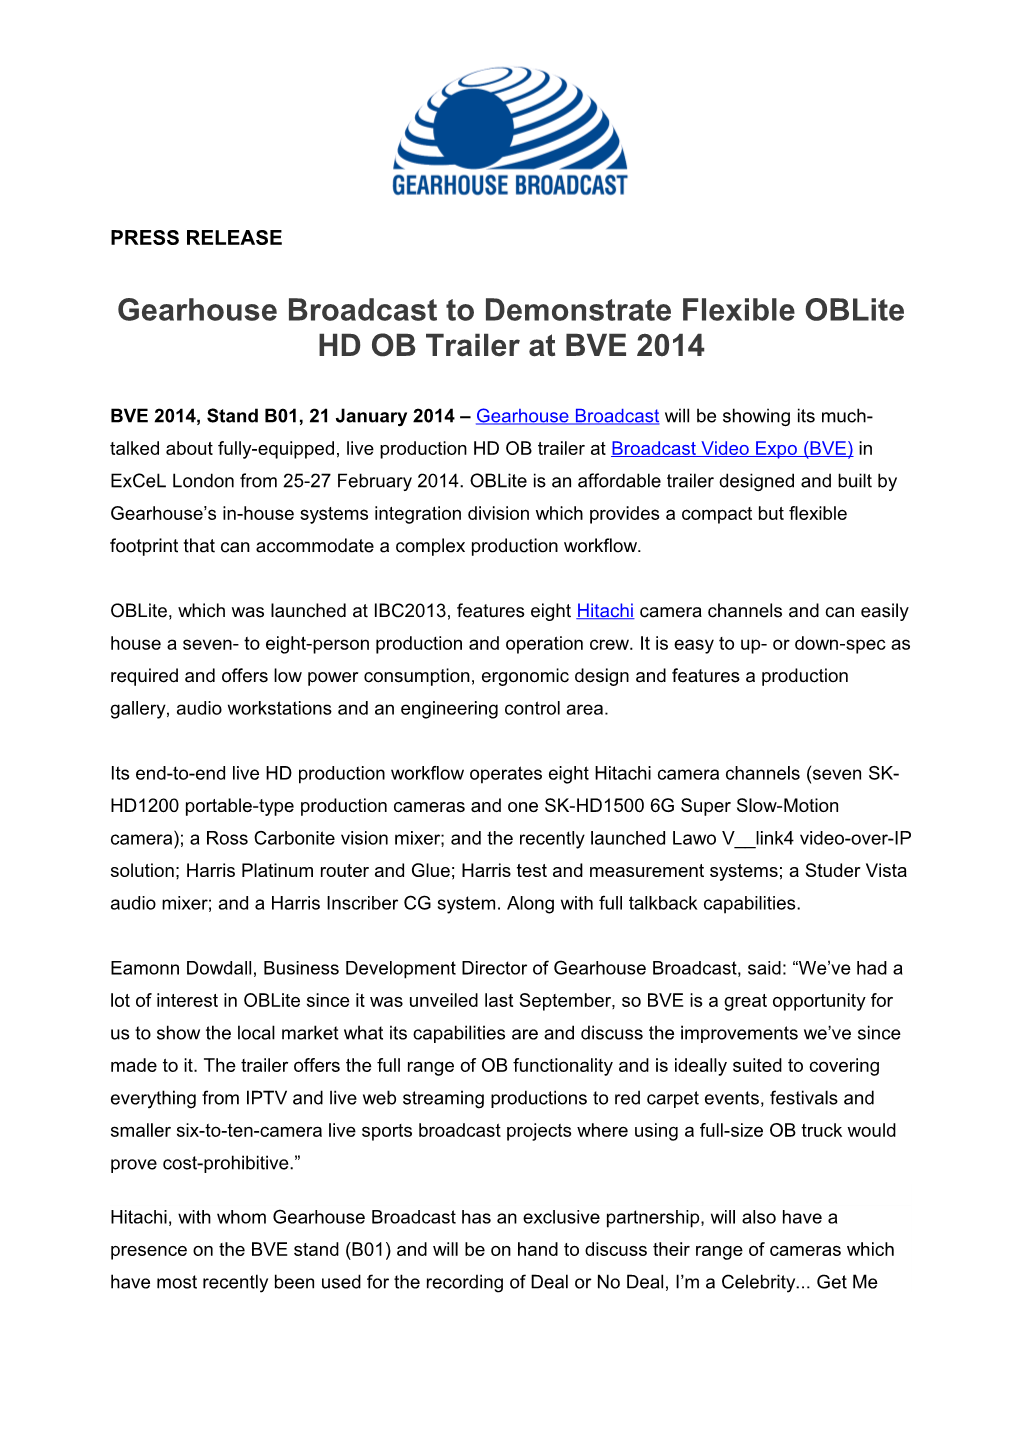 Gearhouse Broadcast to Demonstrate Flexibleoblite HD OB Trailer at BVE2014